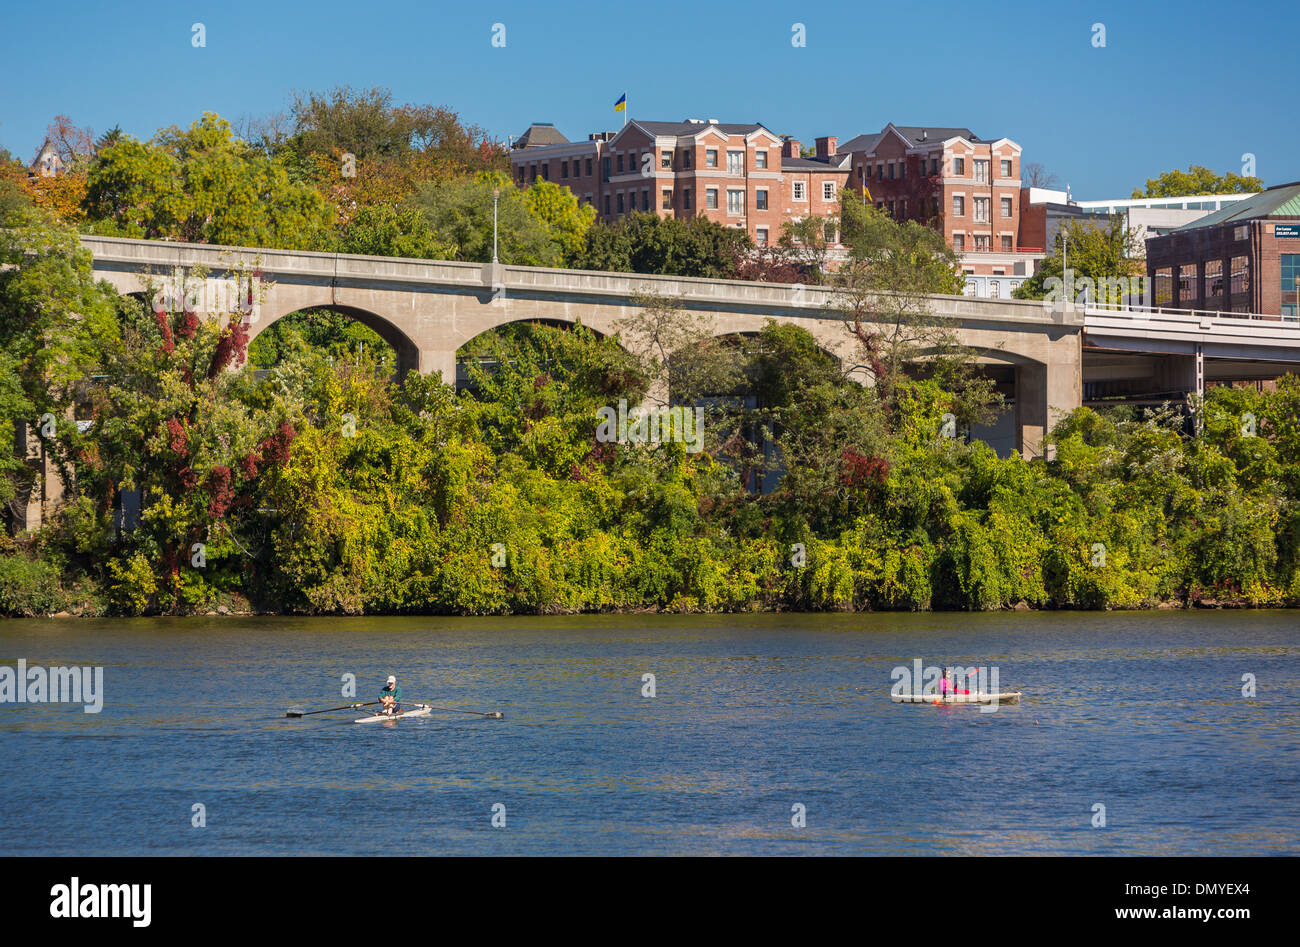 WASHINGTON, DC, USA - People in kayaks on Potomac River, near Georgetown. Whitehurst elevated freeway at rear. Stock Photo